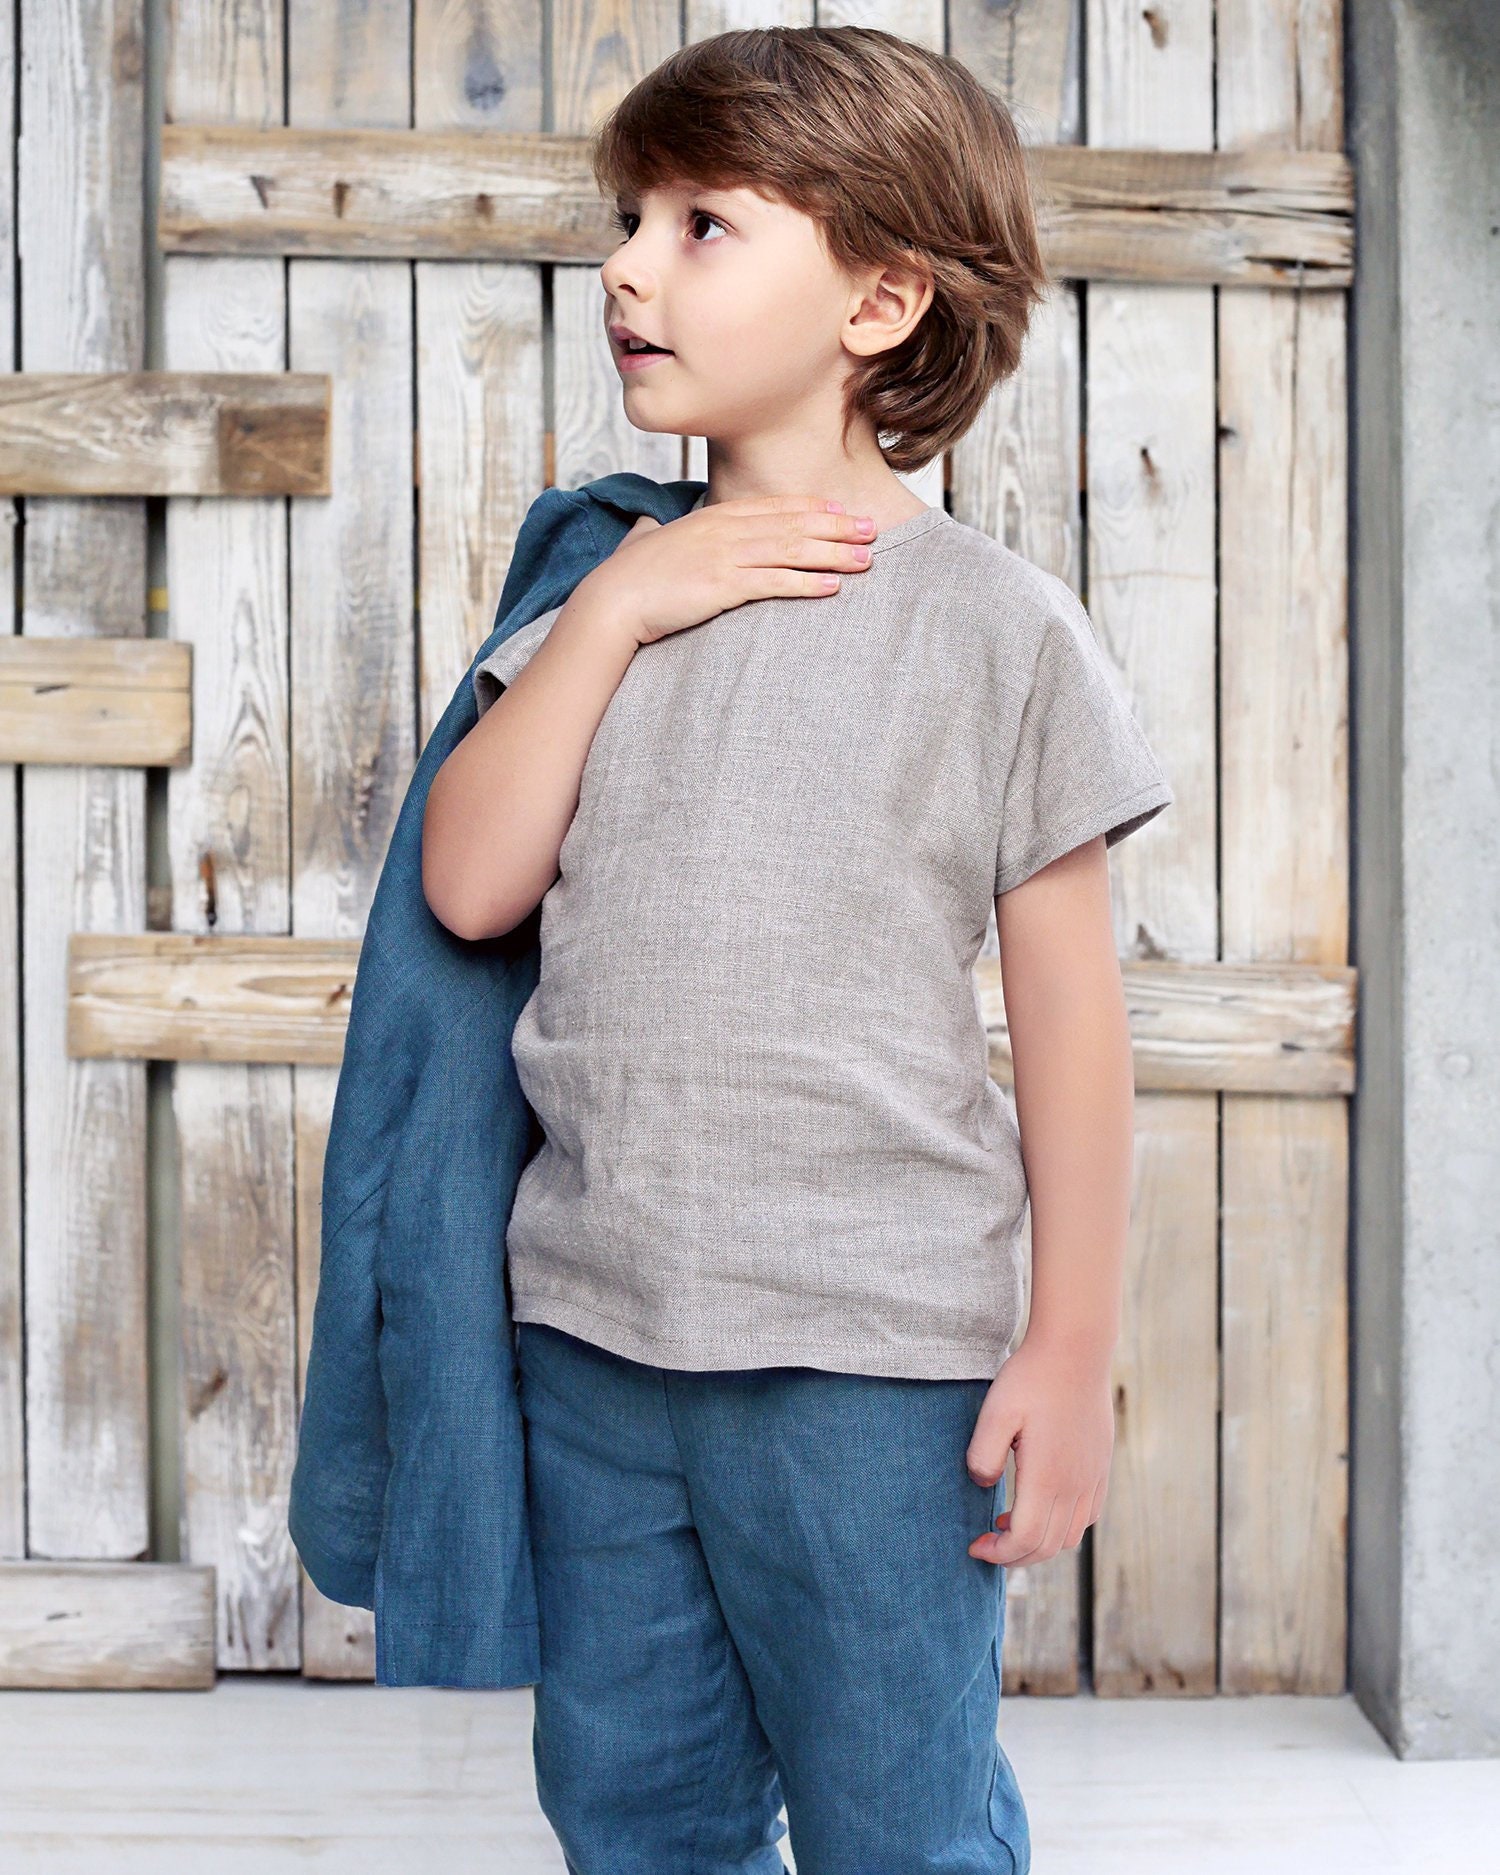 Linen Boys T Shirt Shirt for Boy Linen Clothes for Kids - Etsy